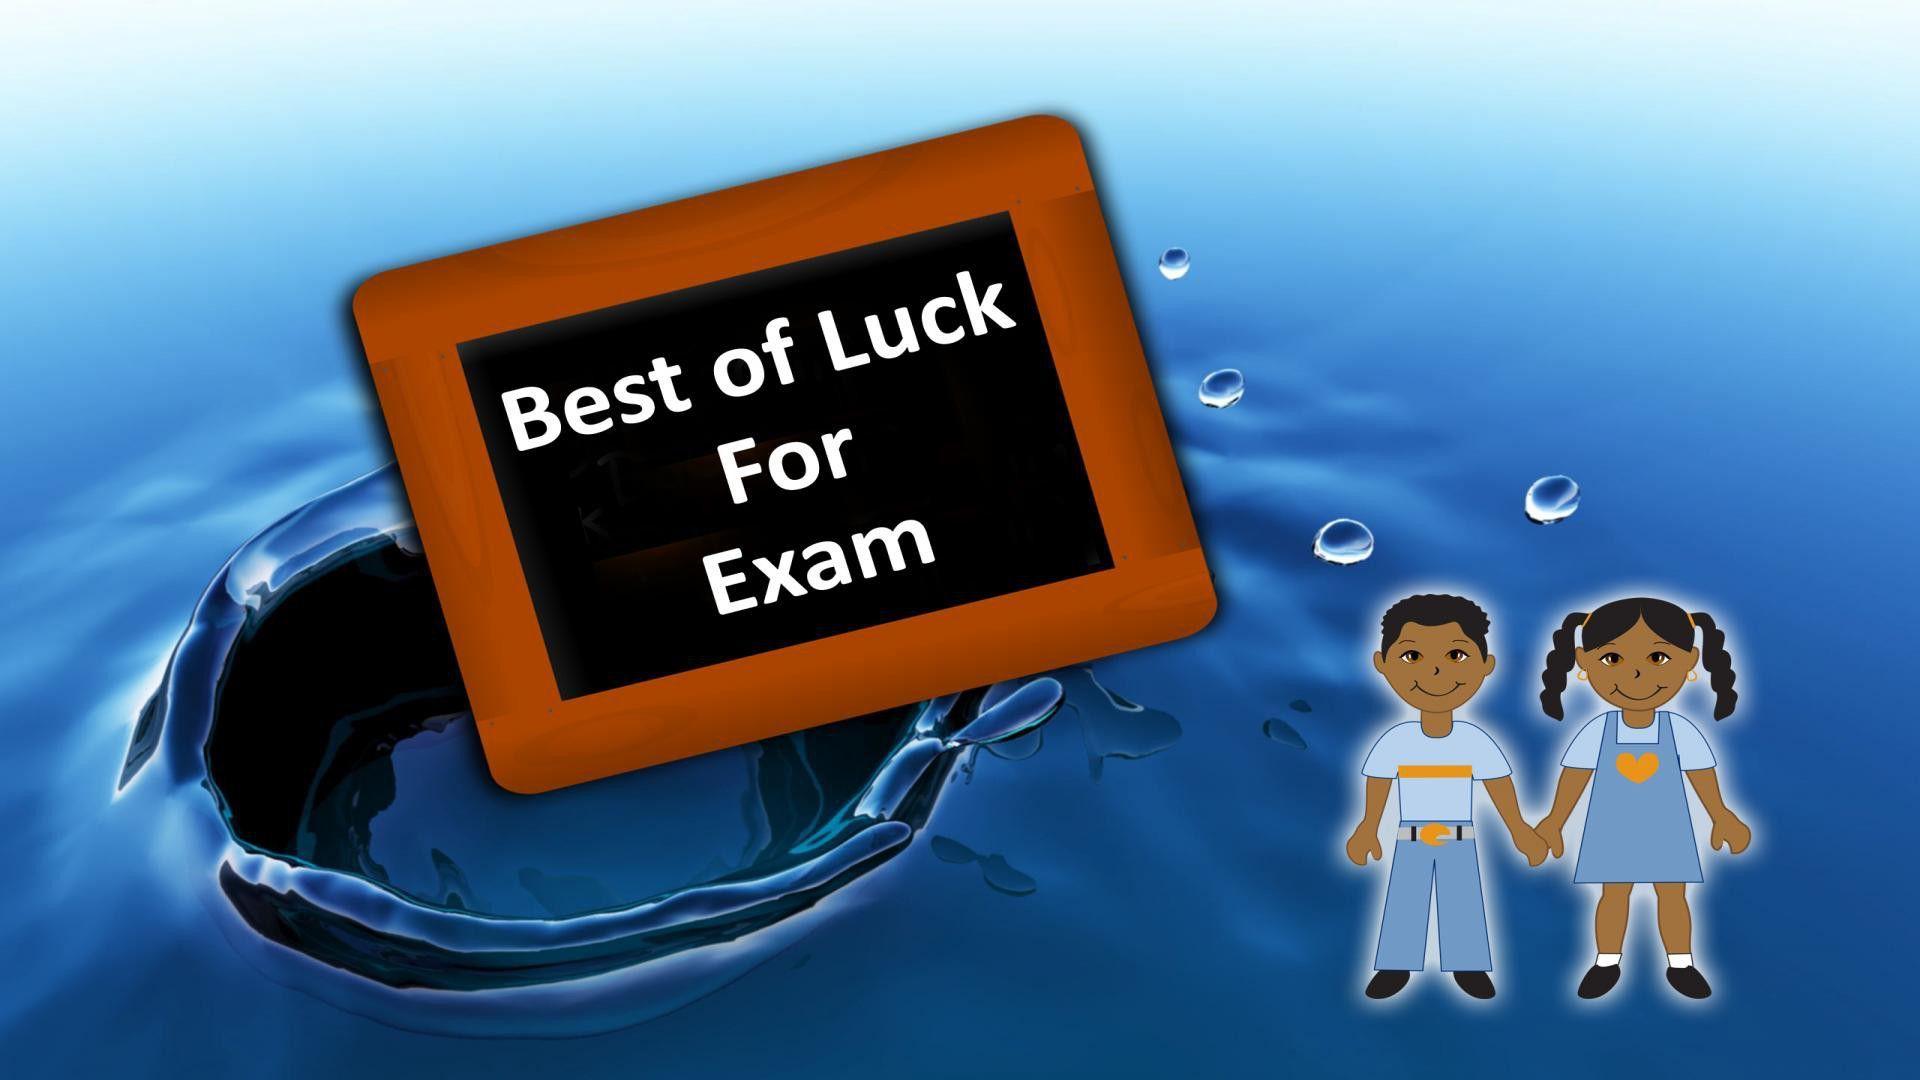 Best Of Luck For Exam HD Wallpaper